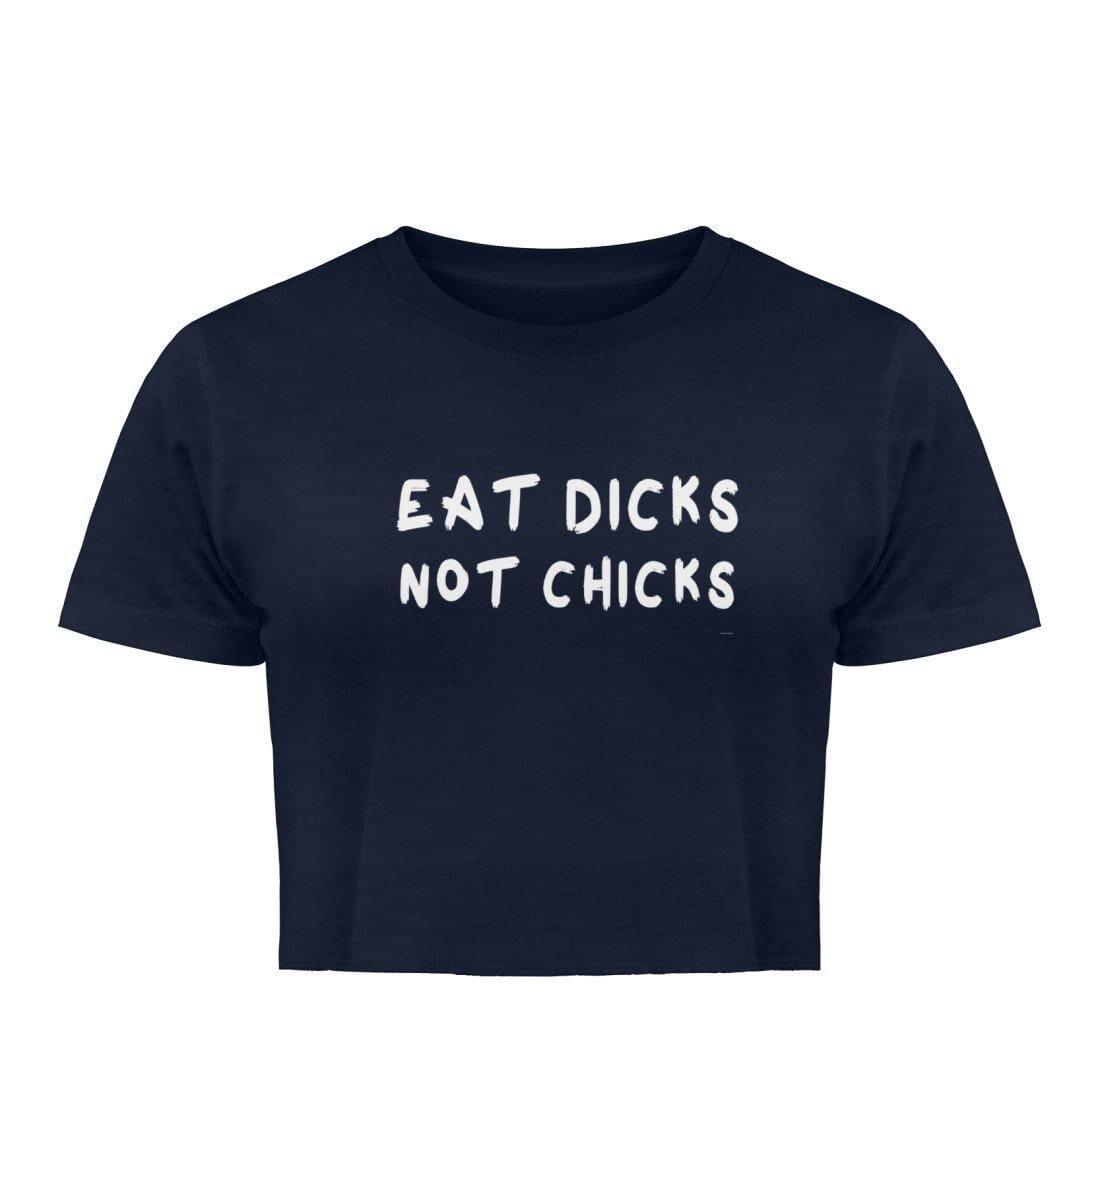 Eat dicks not chicks - Damen Organic Crop Top - Team Vegan © vegan t shirt